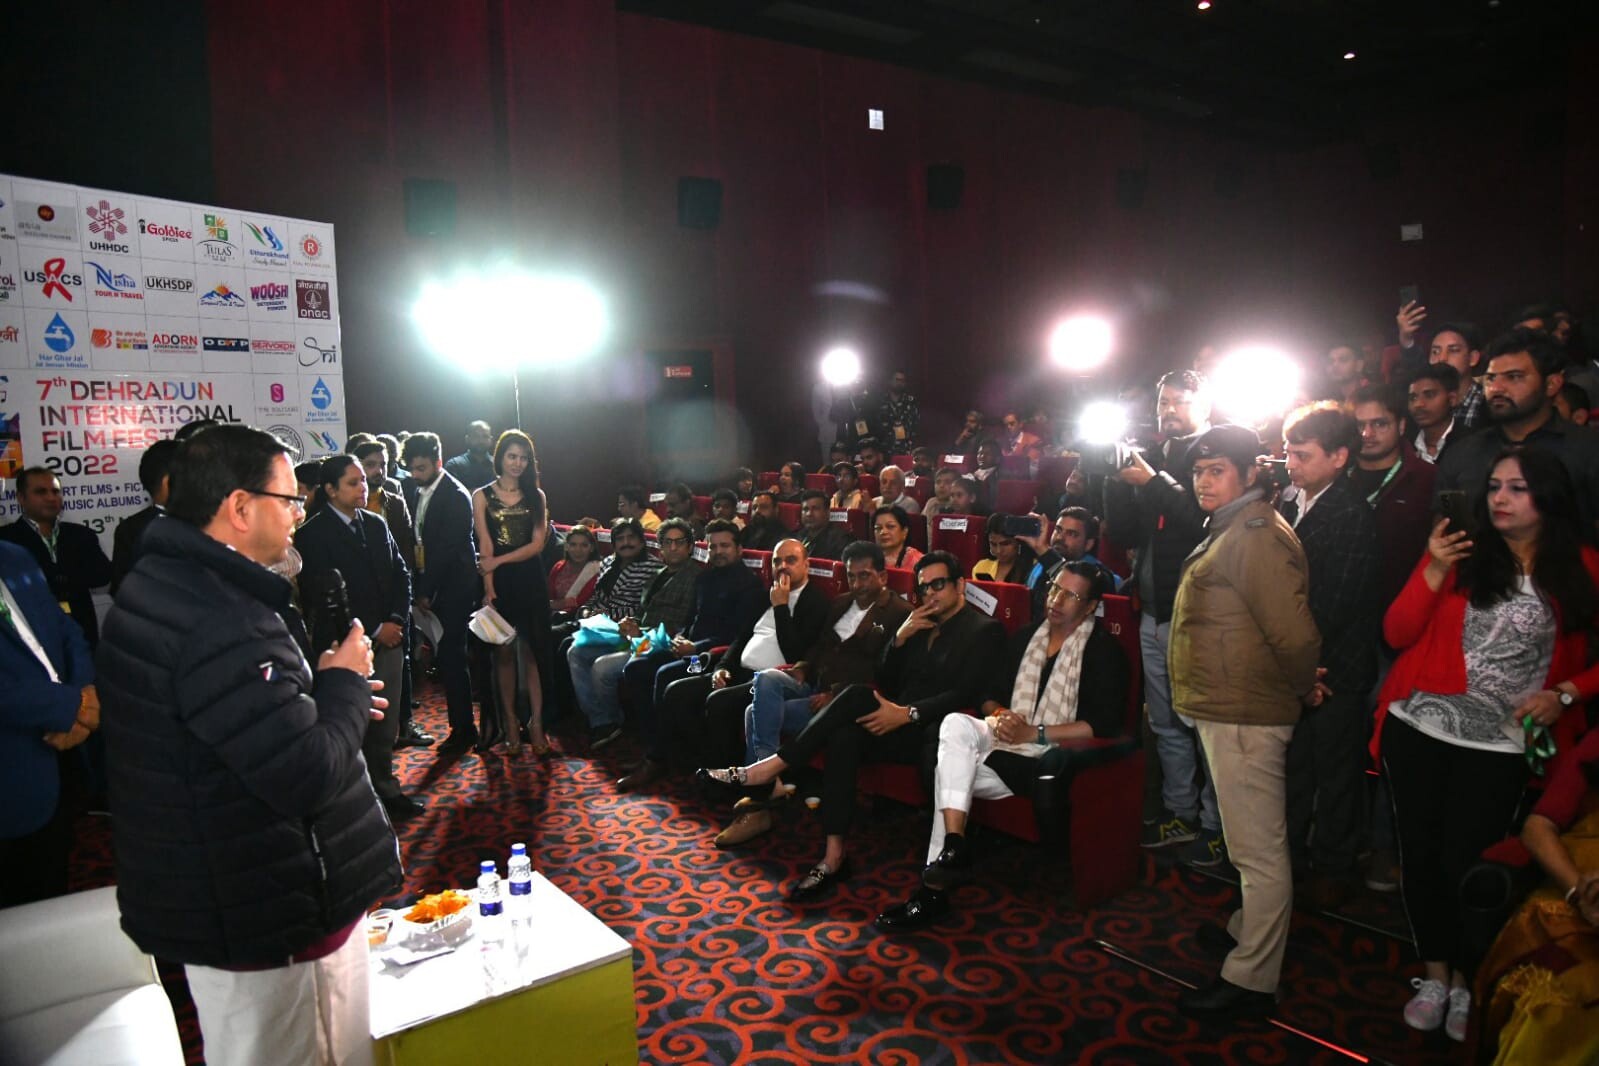 Pushkar SIngh Dhami during Dehradun International Film Festival 